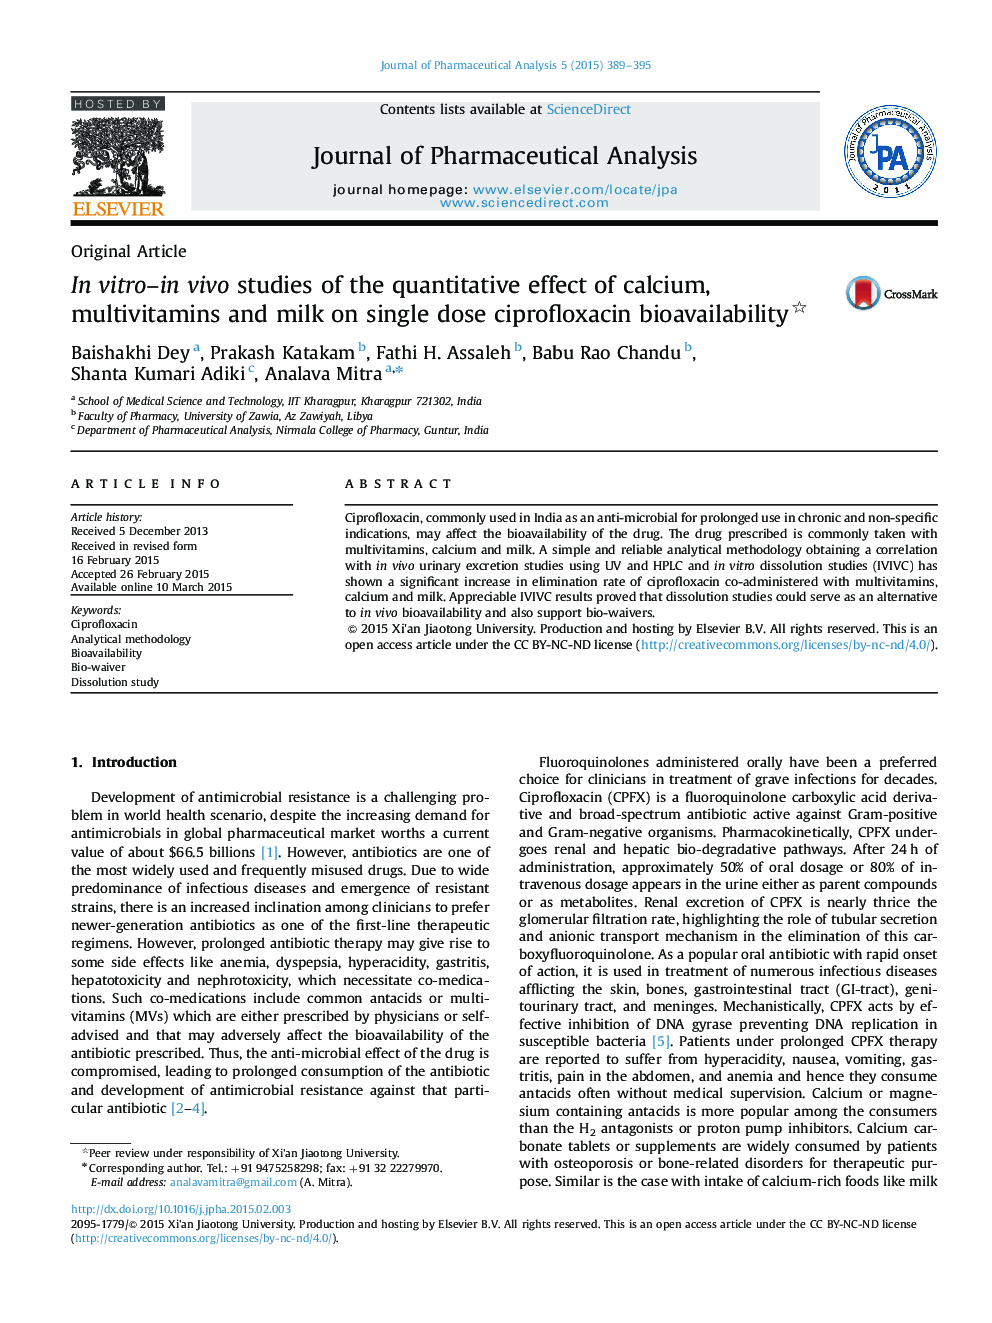 In vitro–in vivo studies of the quantitative effect of calcium, multivitamins and milk on single dose ciprofloxacin bioavailability 